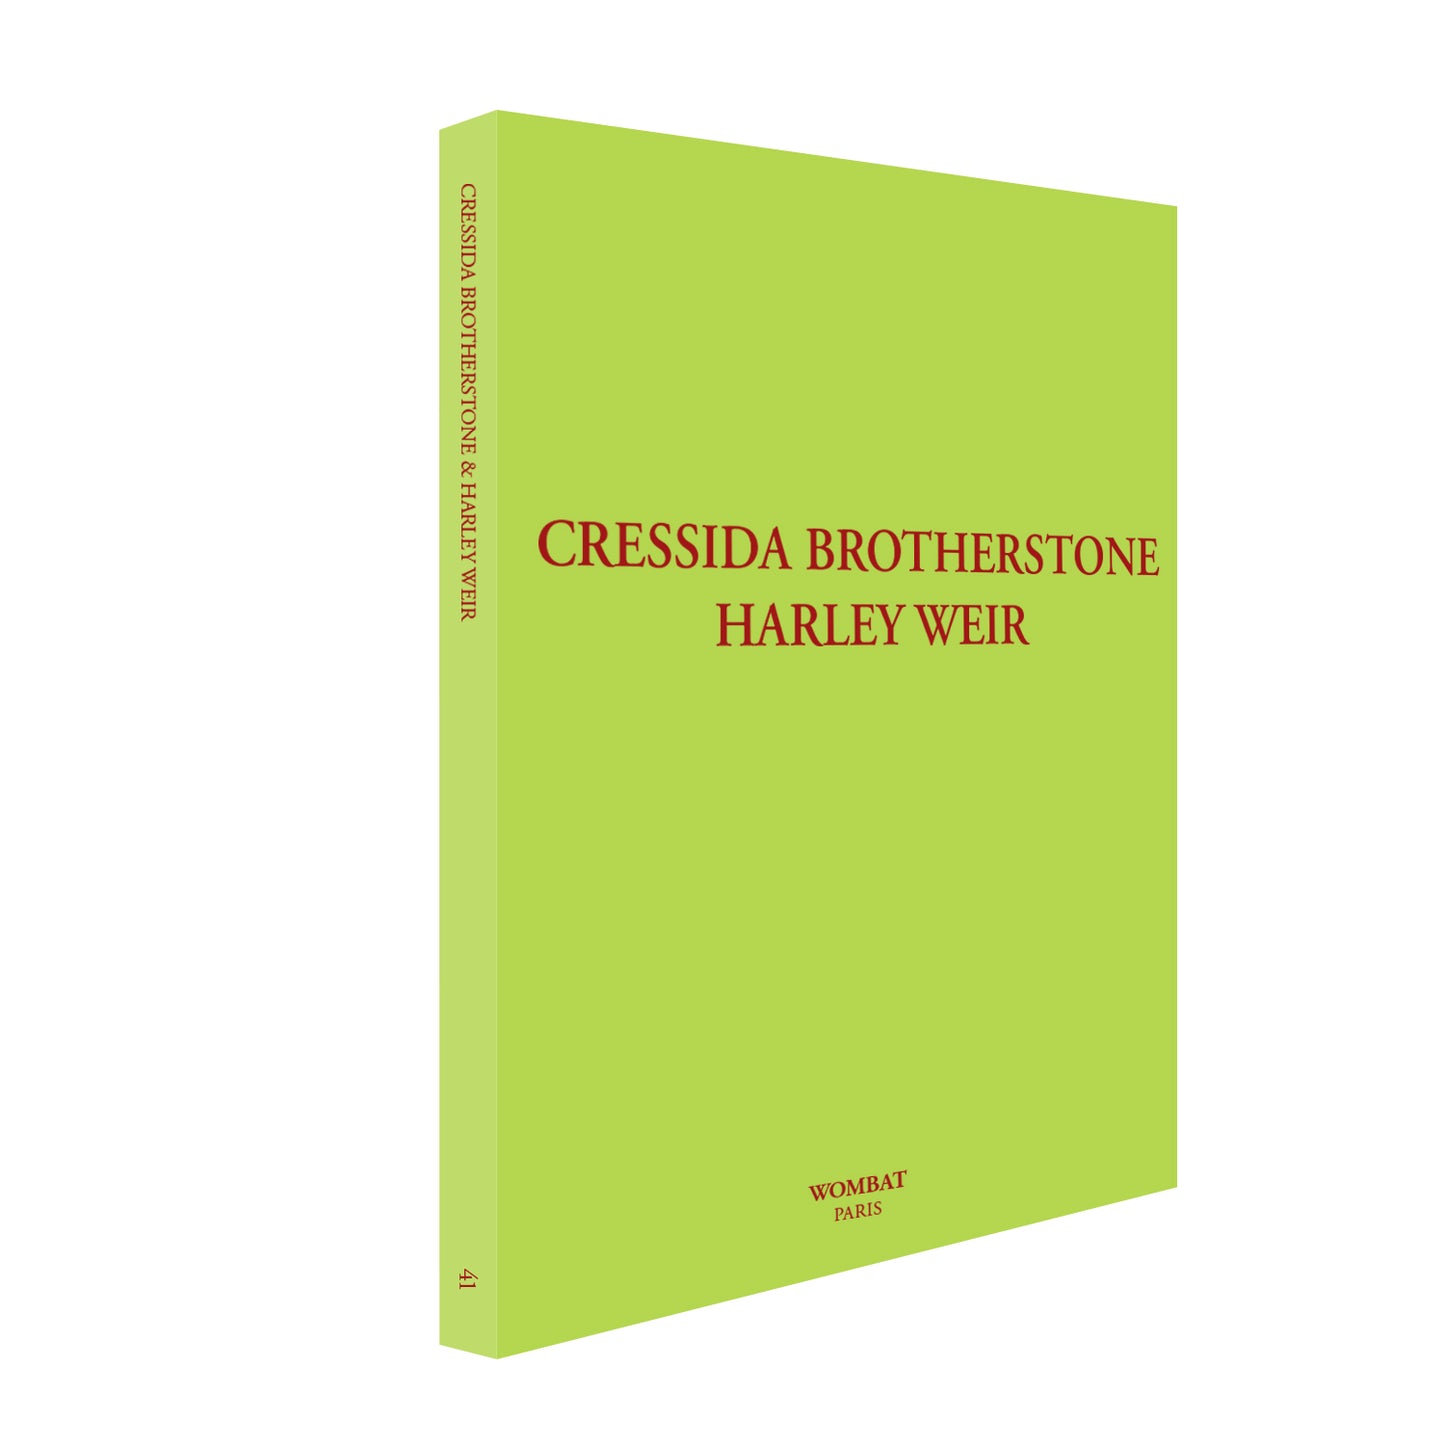 Artist Box 41 - Harley Weir & Cressida Brotherstone